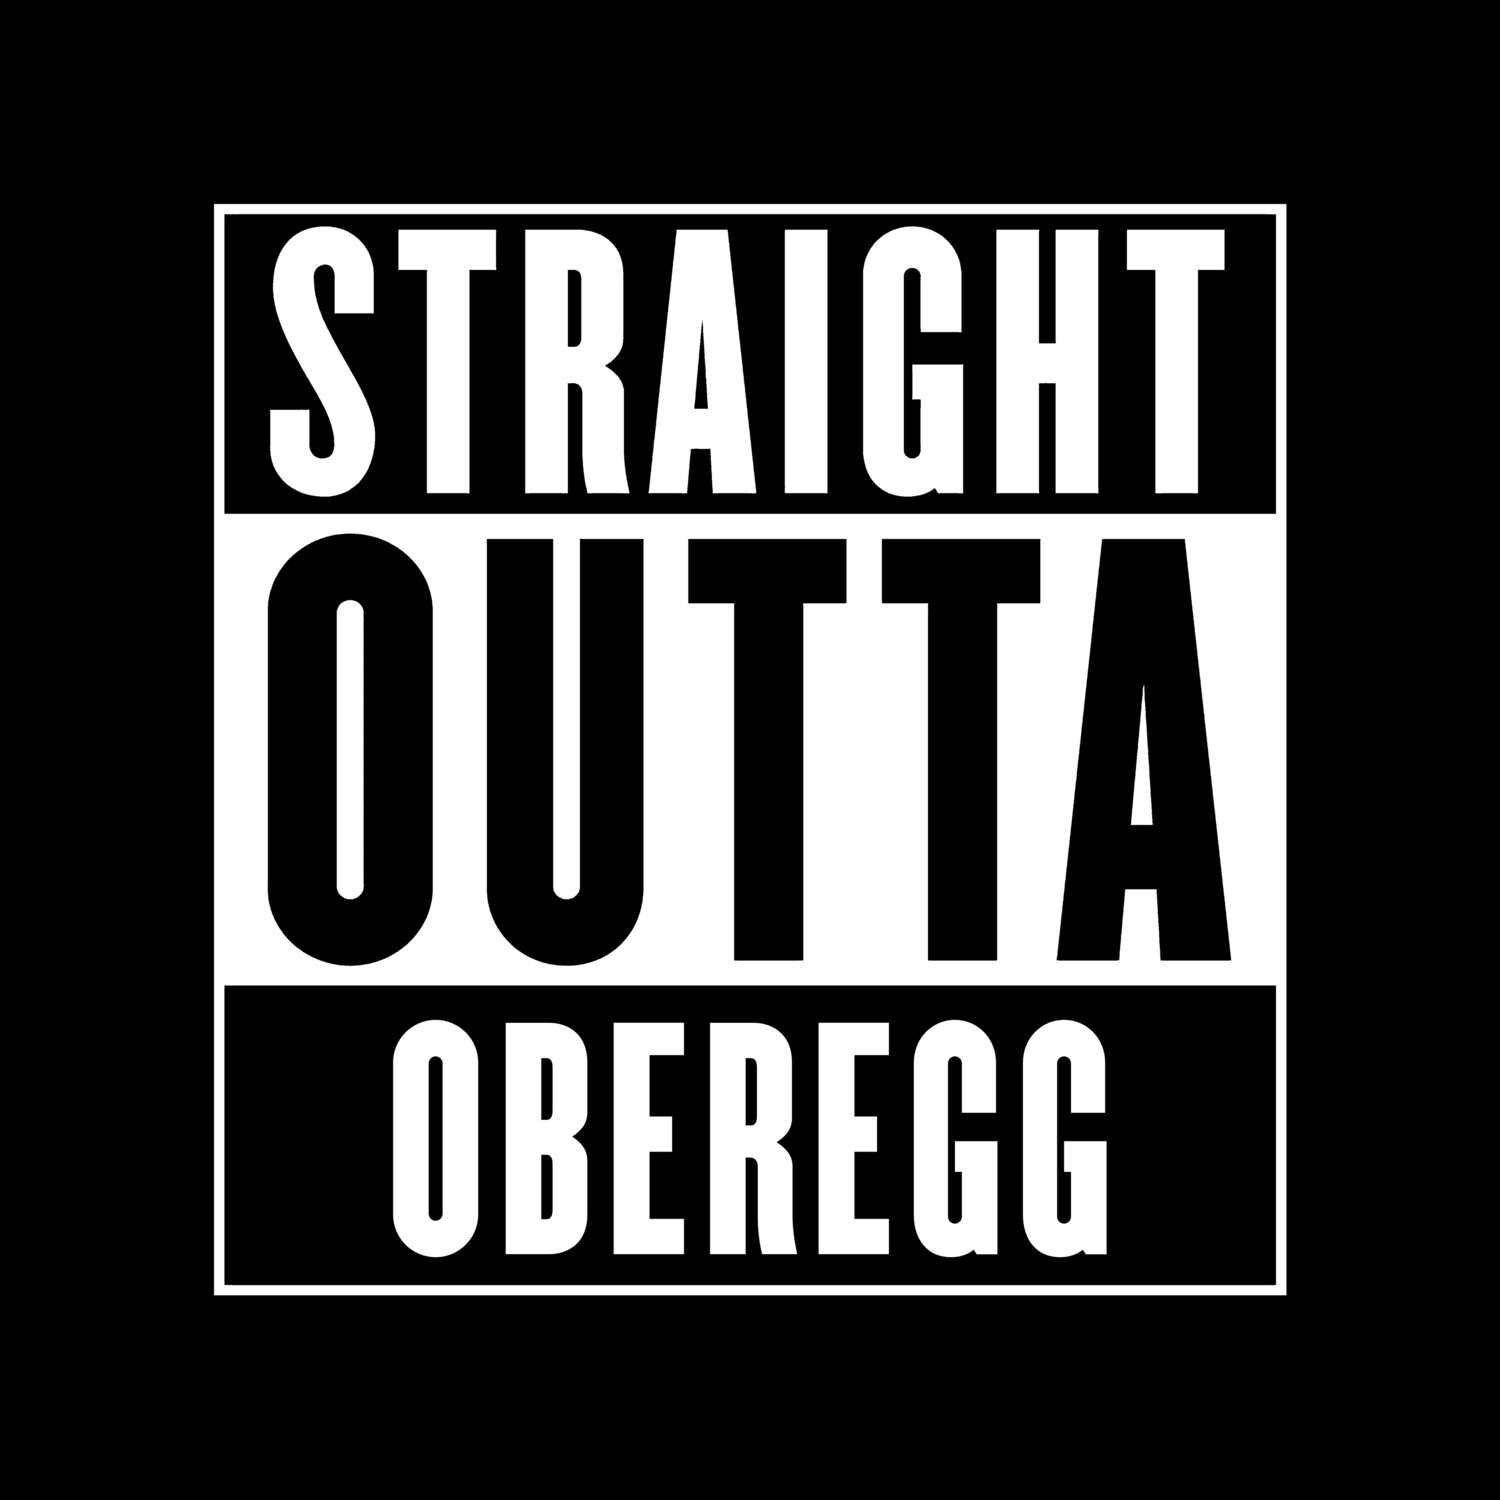 Oberegg T-Shirt »Straight Outta«